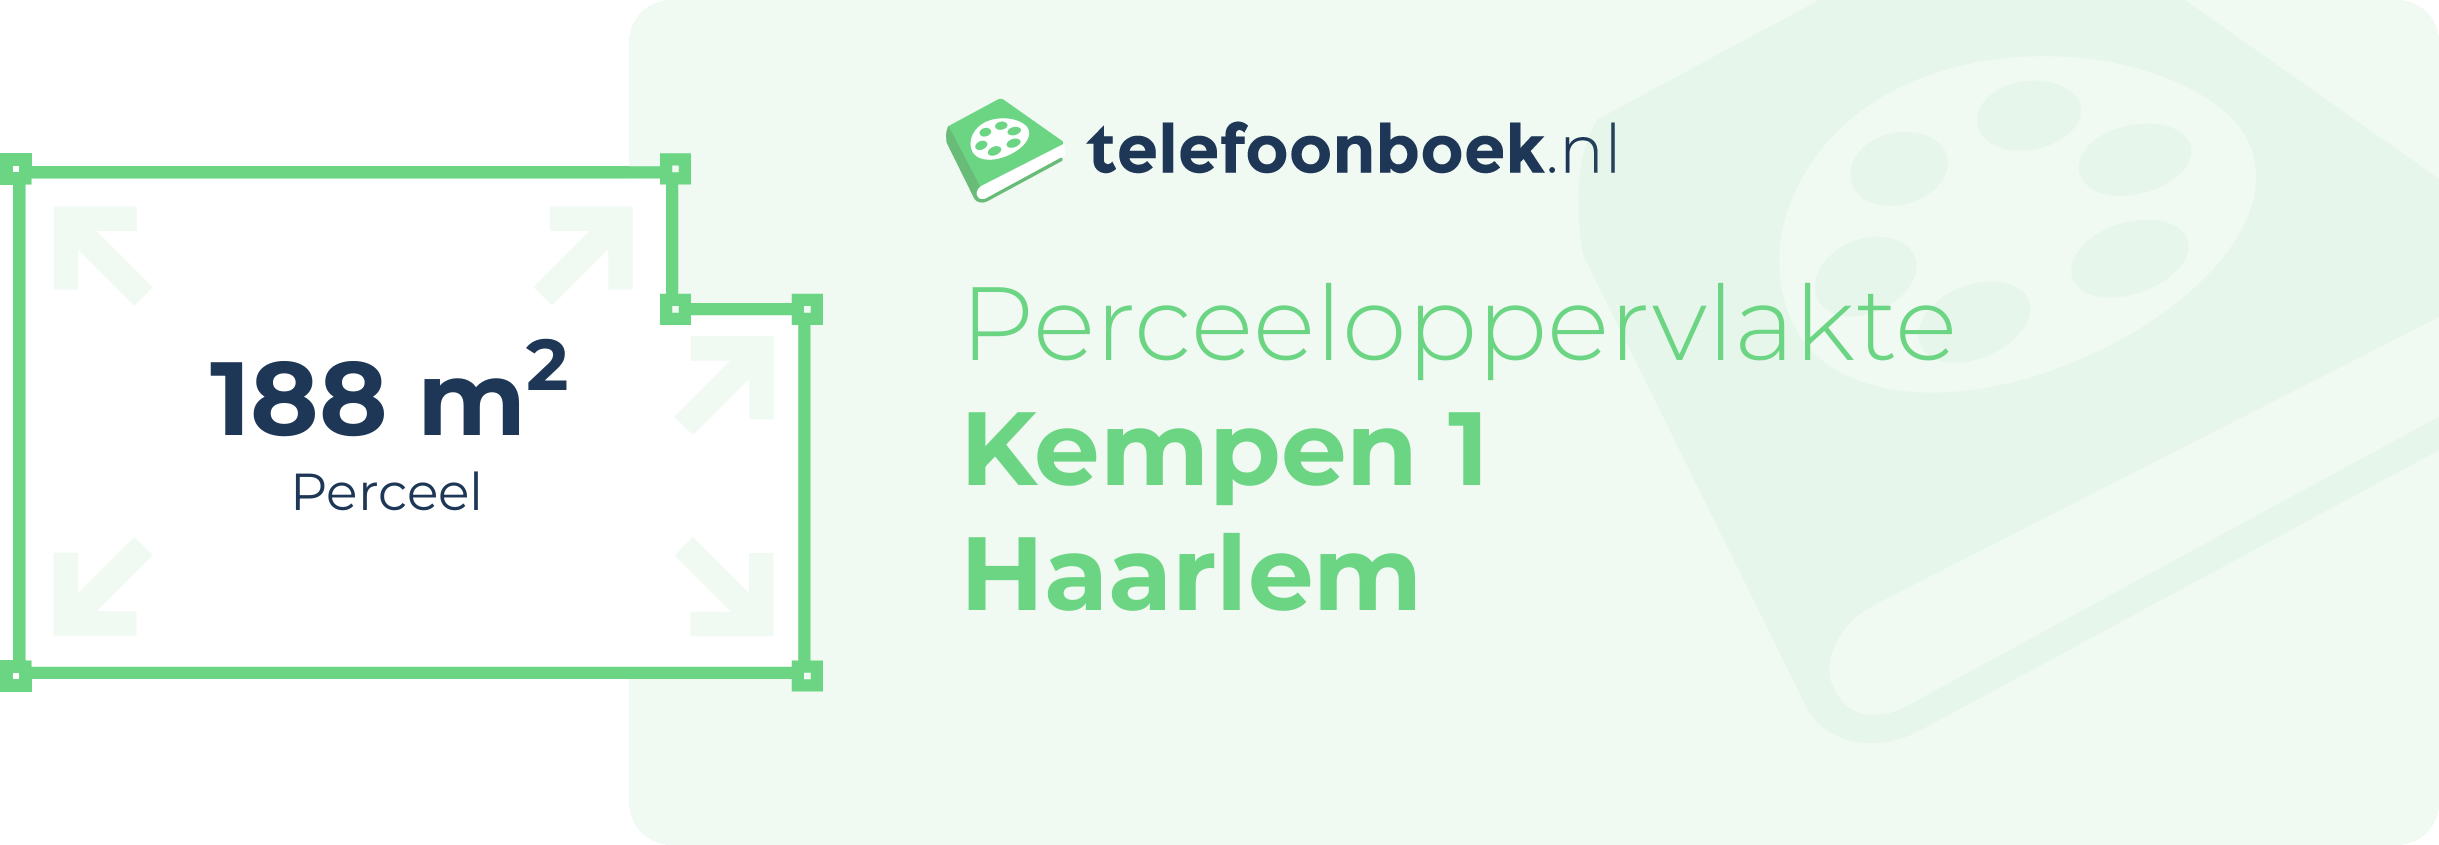 Perceeloppervlakte Kempen 1 Haarlem